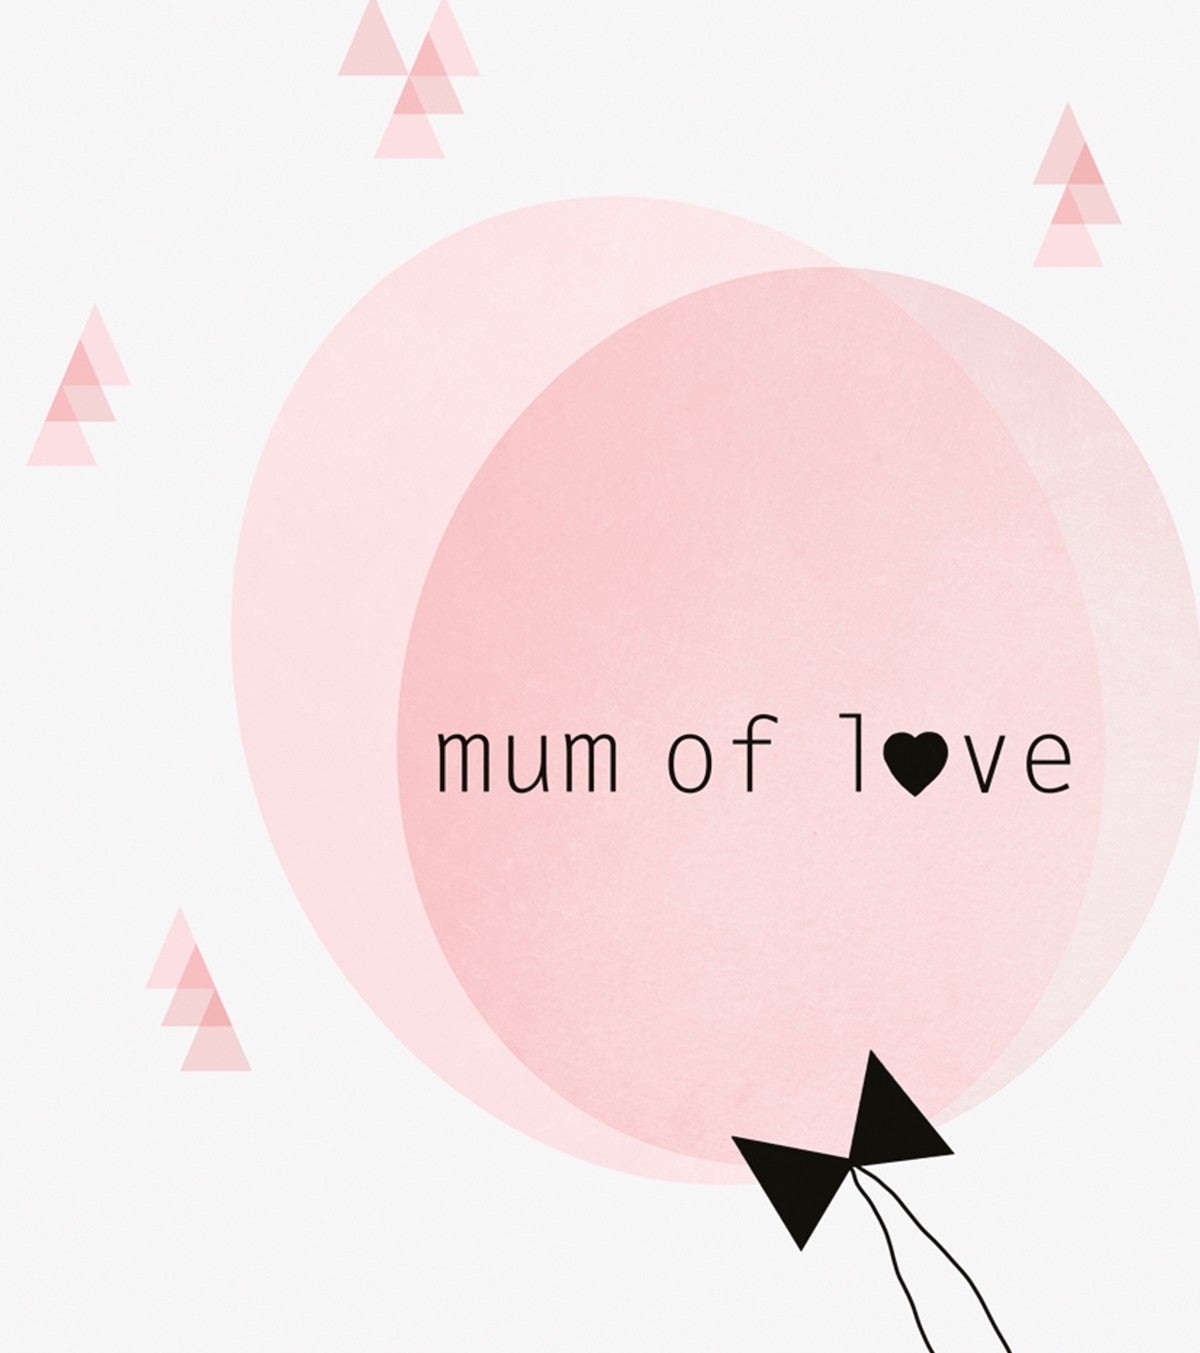 MUM OF LOVE - Poster Kind - Mum of love